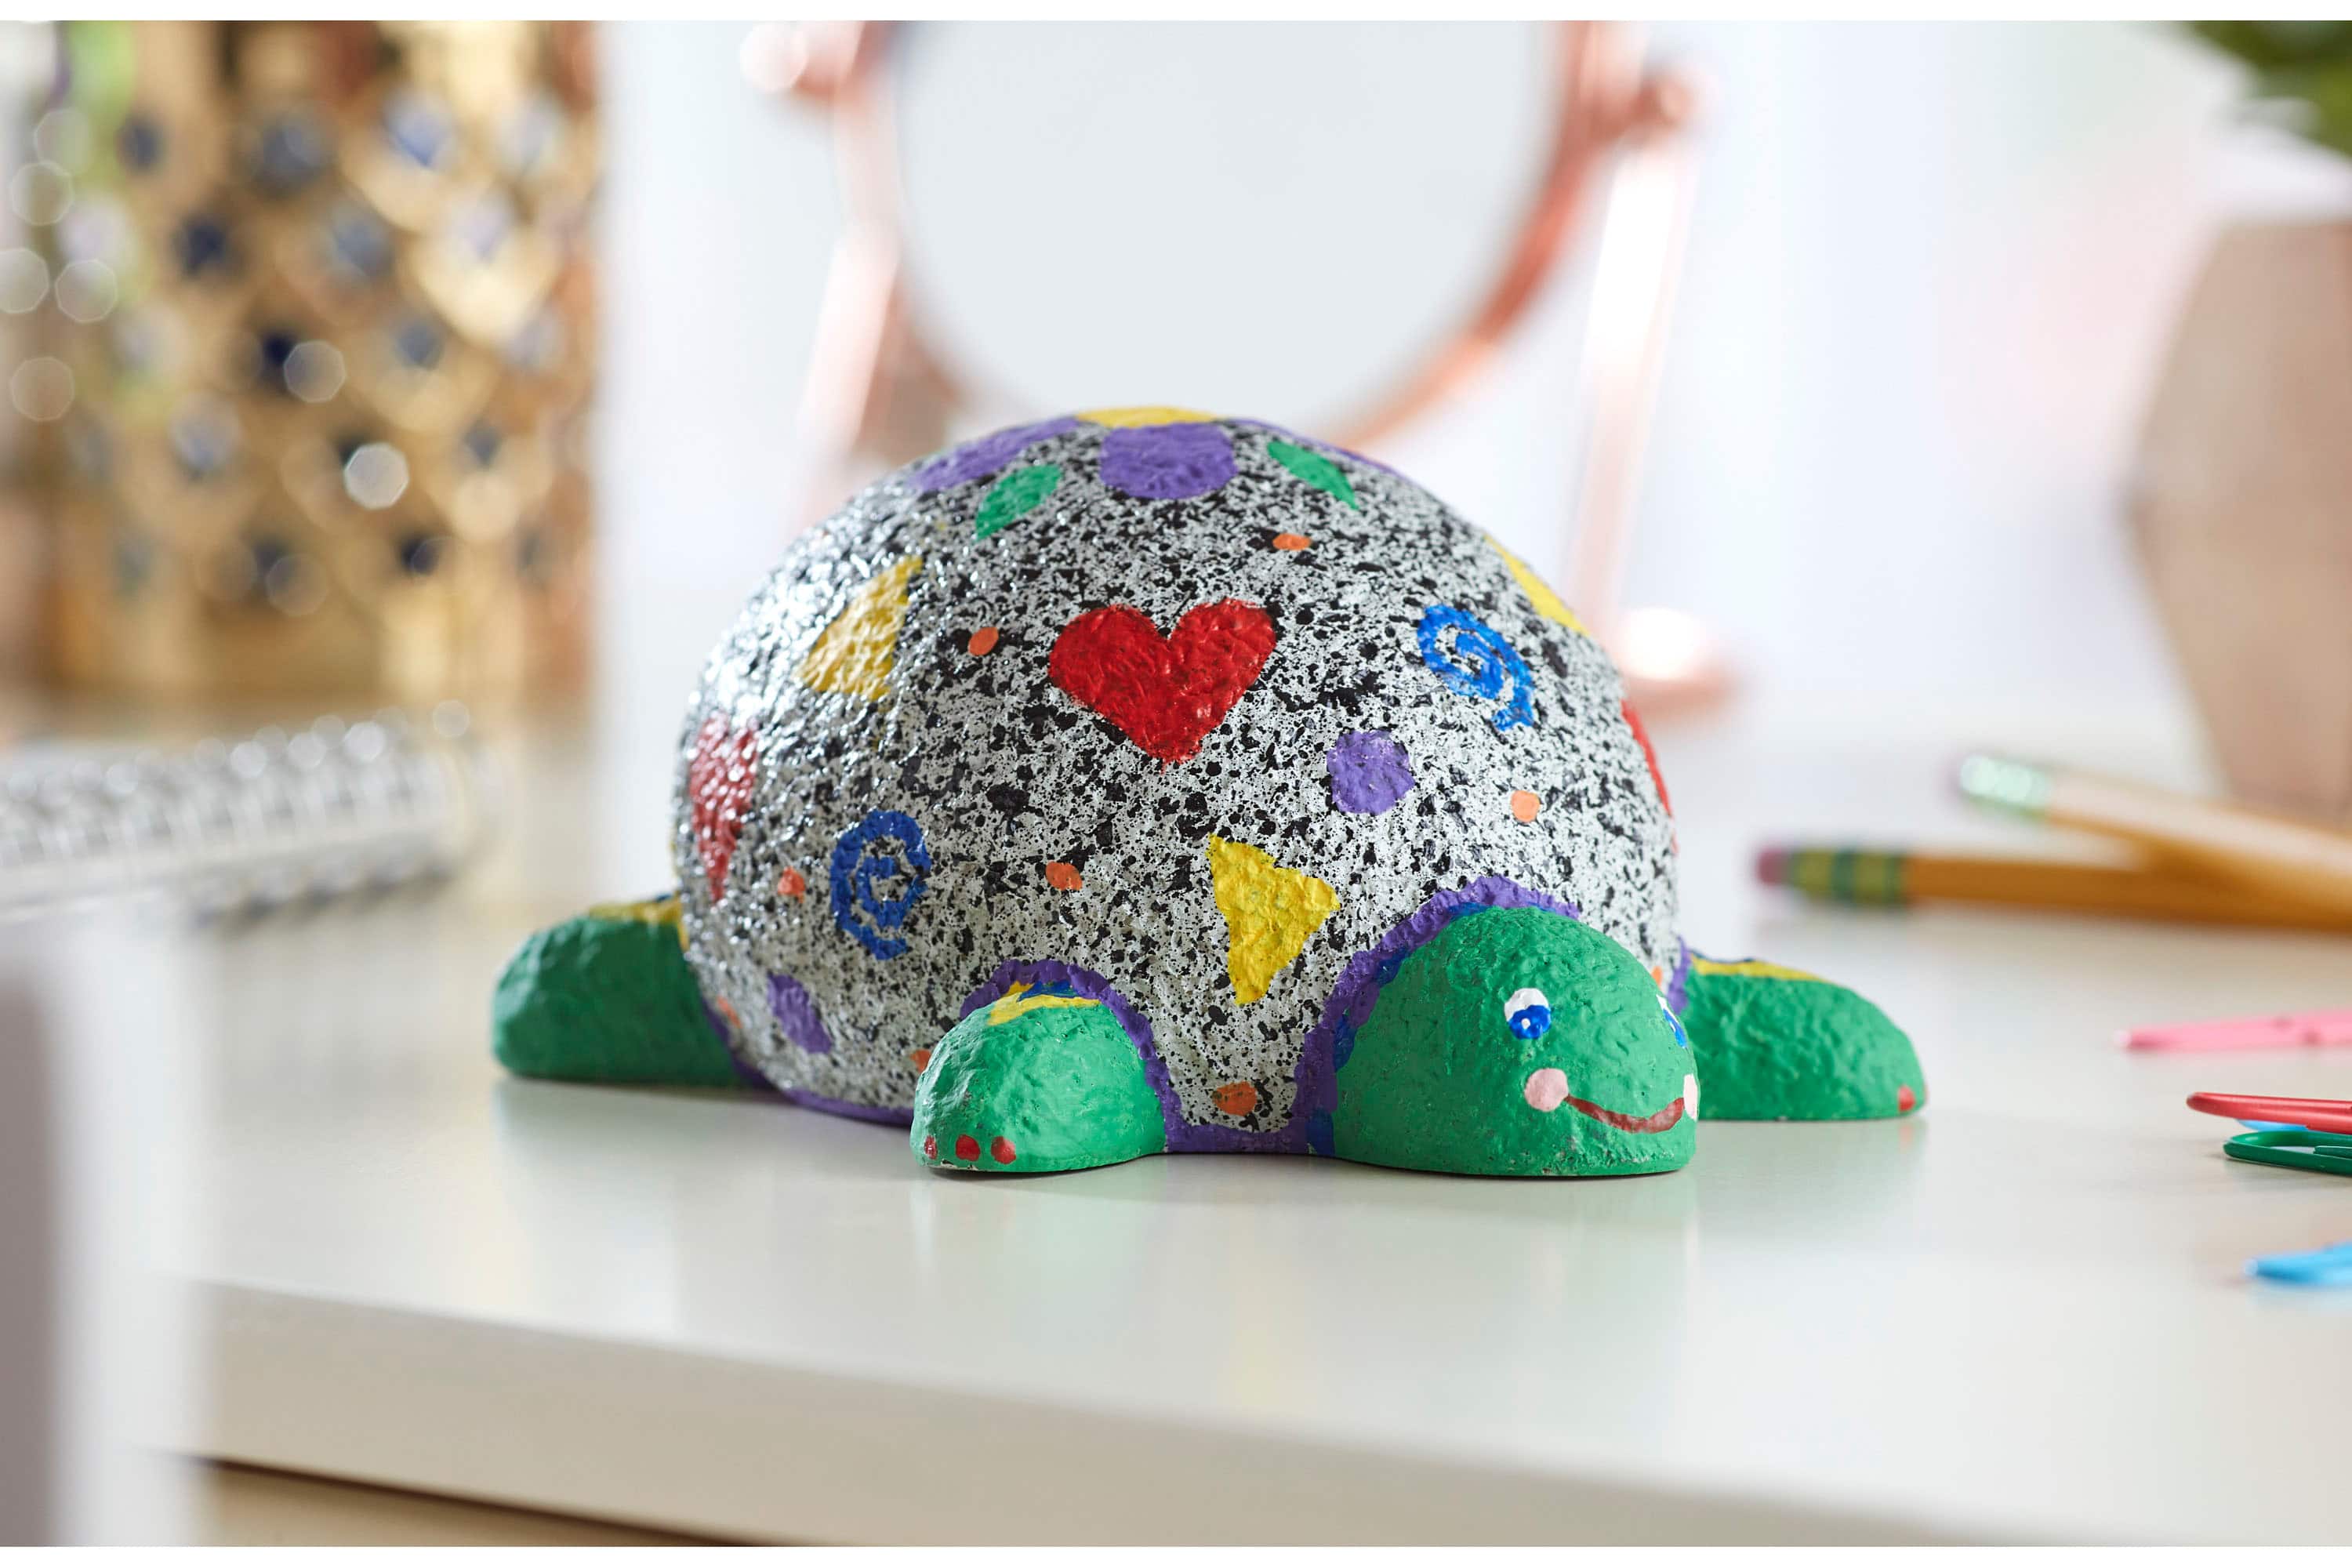 ALEX Toys Craft Rock Pets Turtle Kids Art and Craft Activity